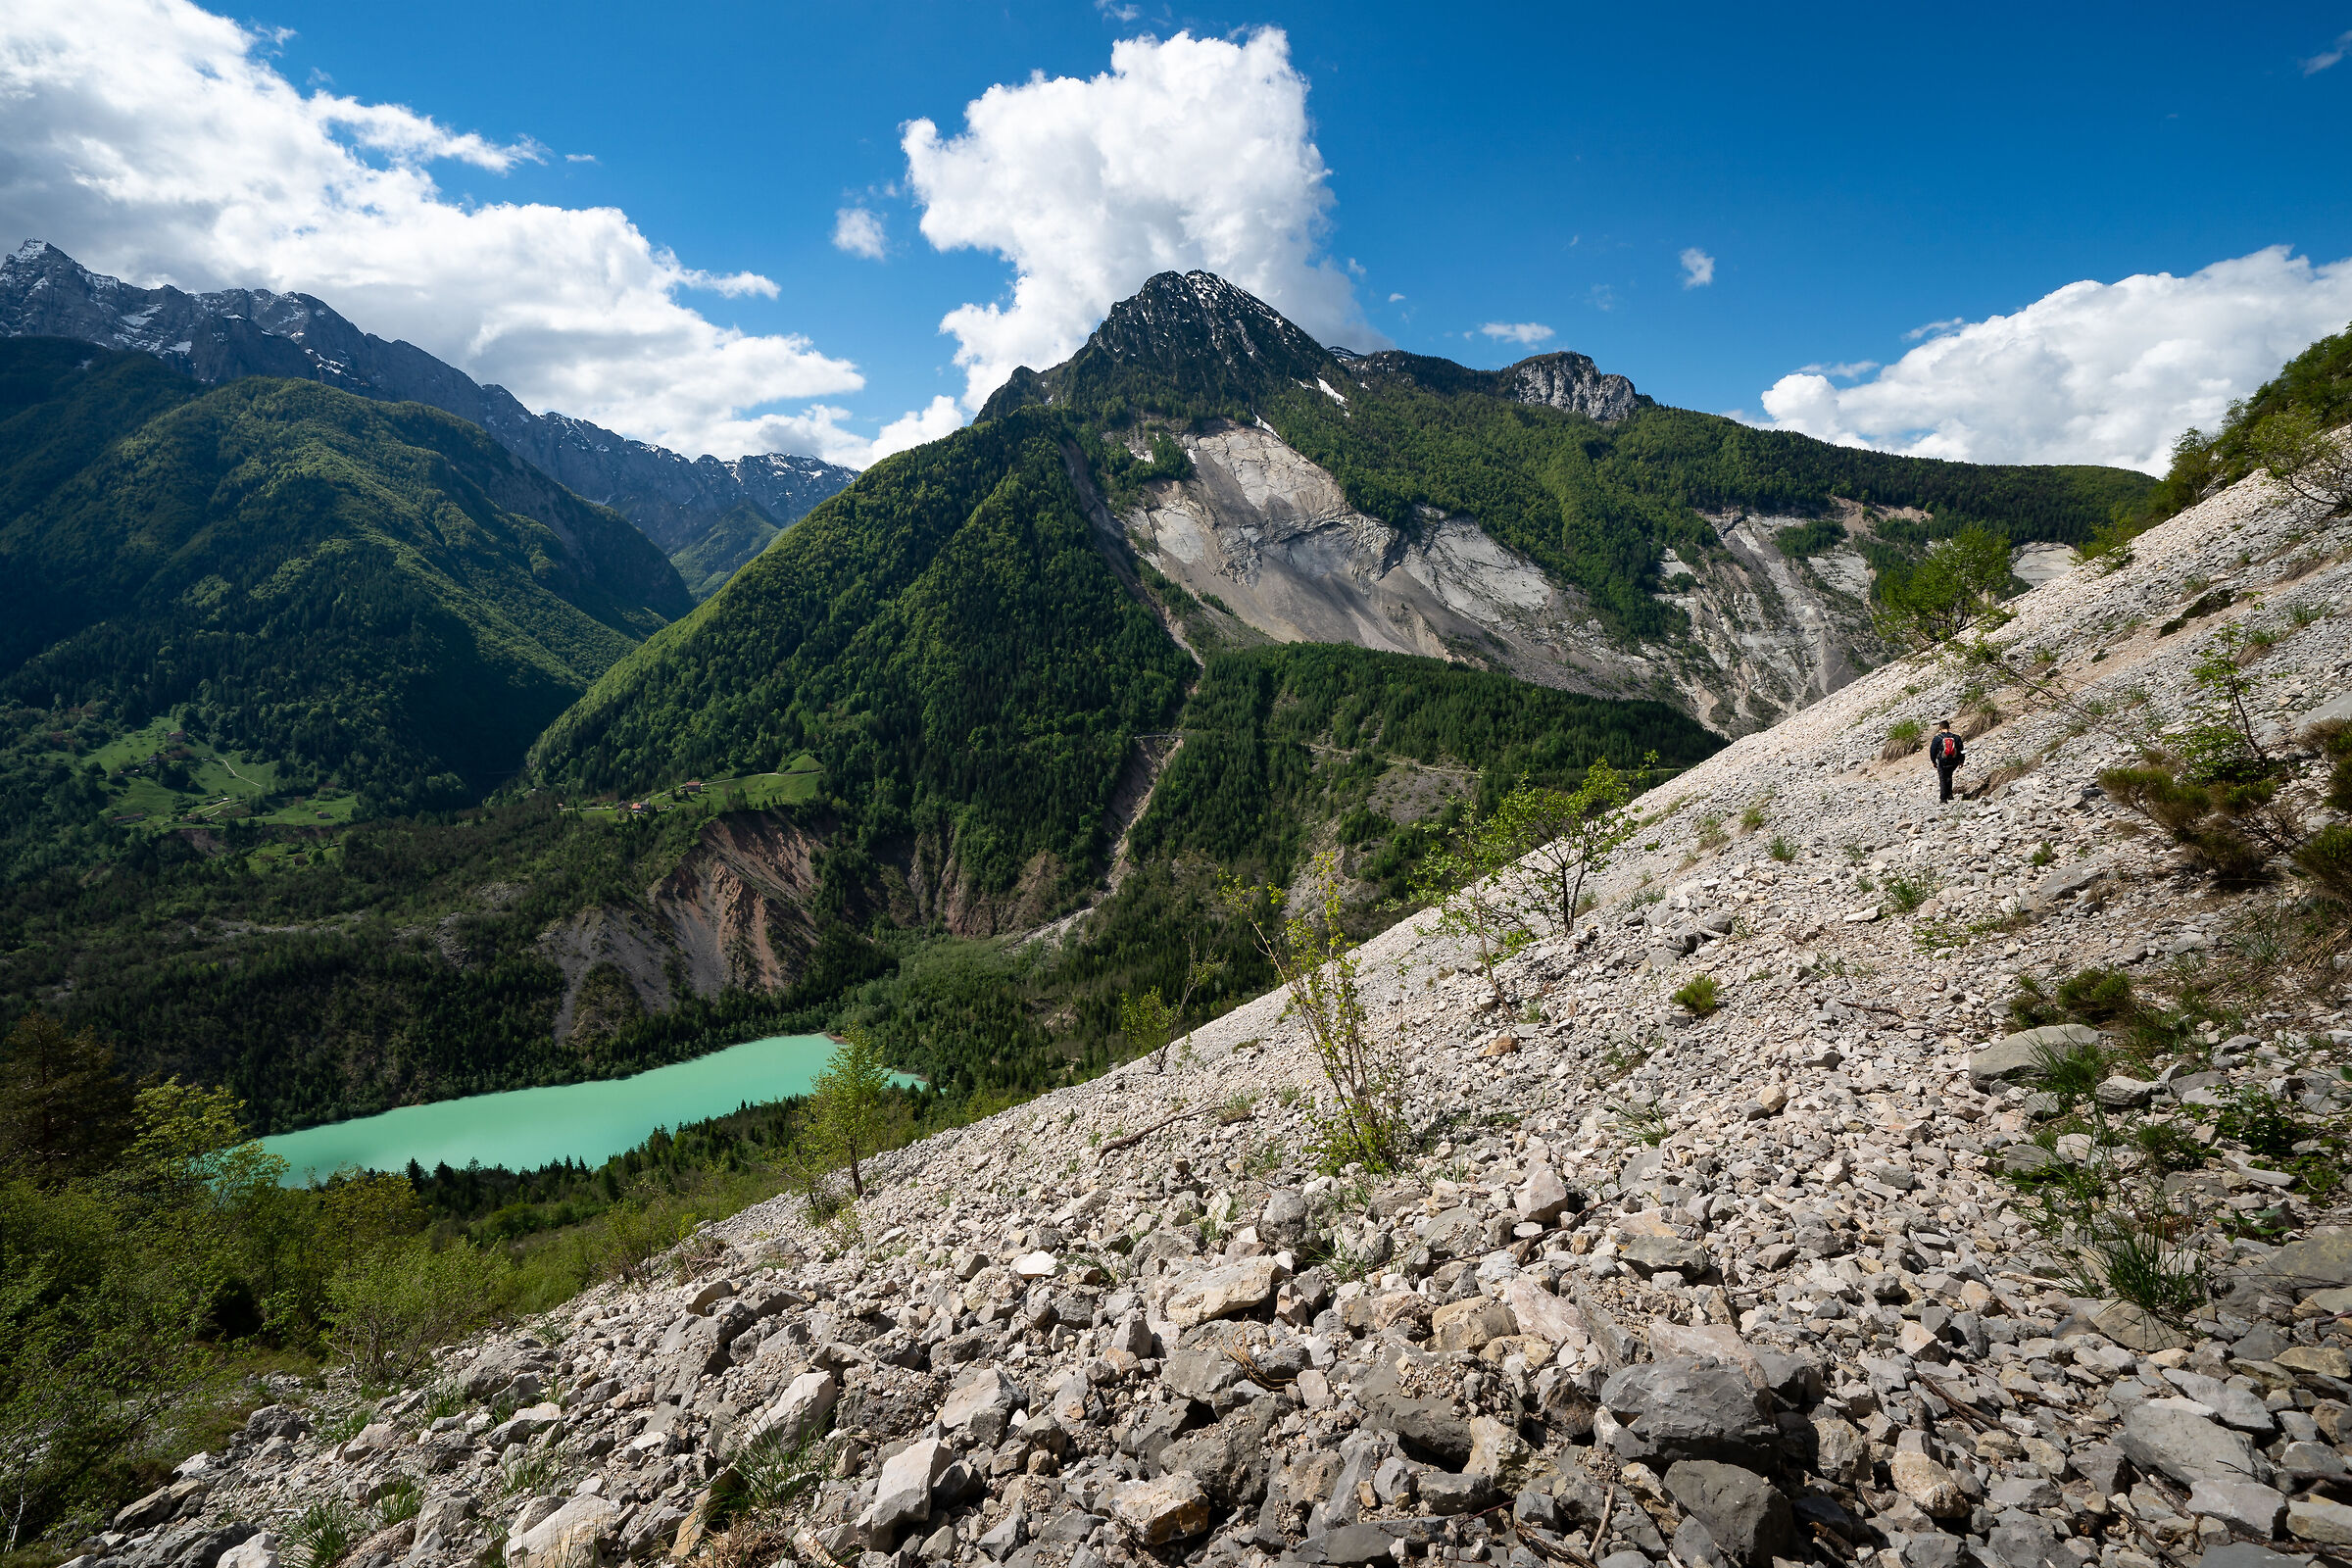 Mount Toc landslide from Erto-Casso coal trail...